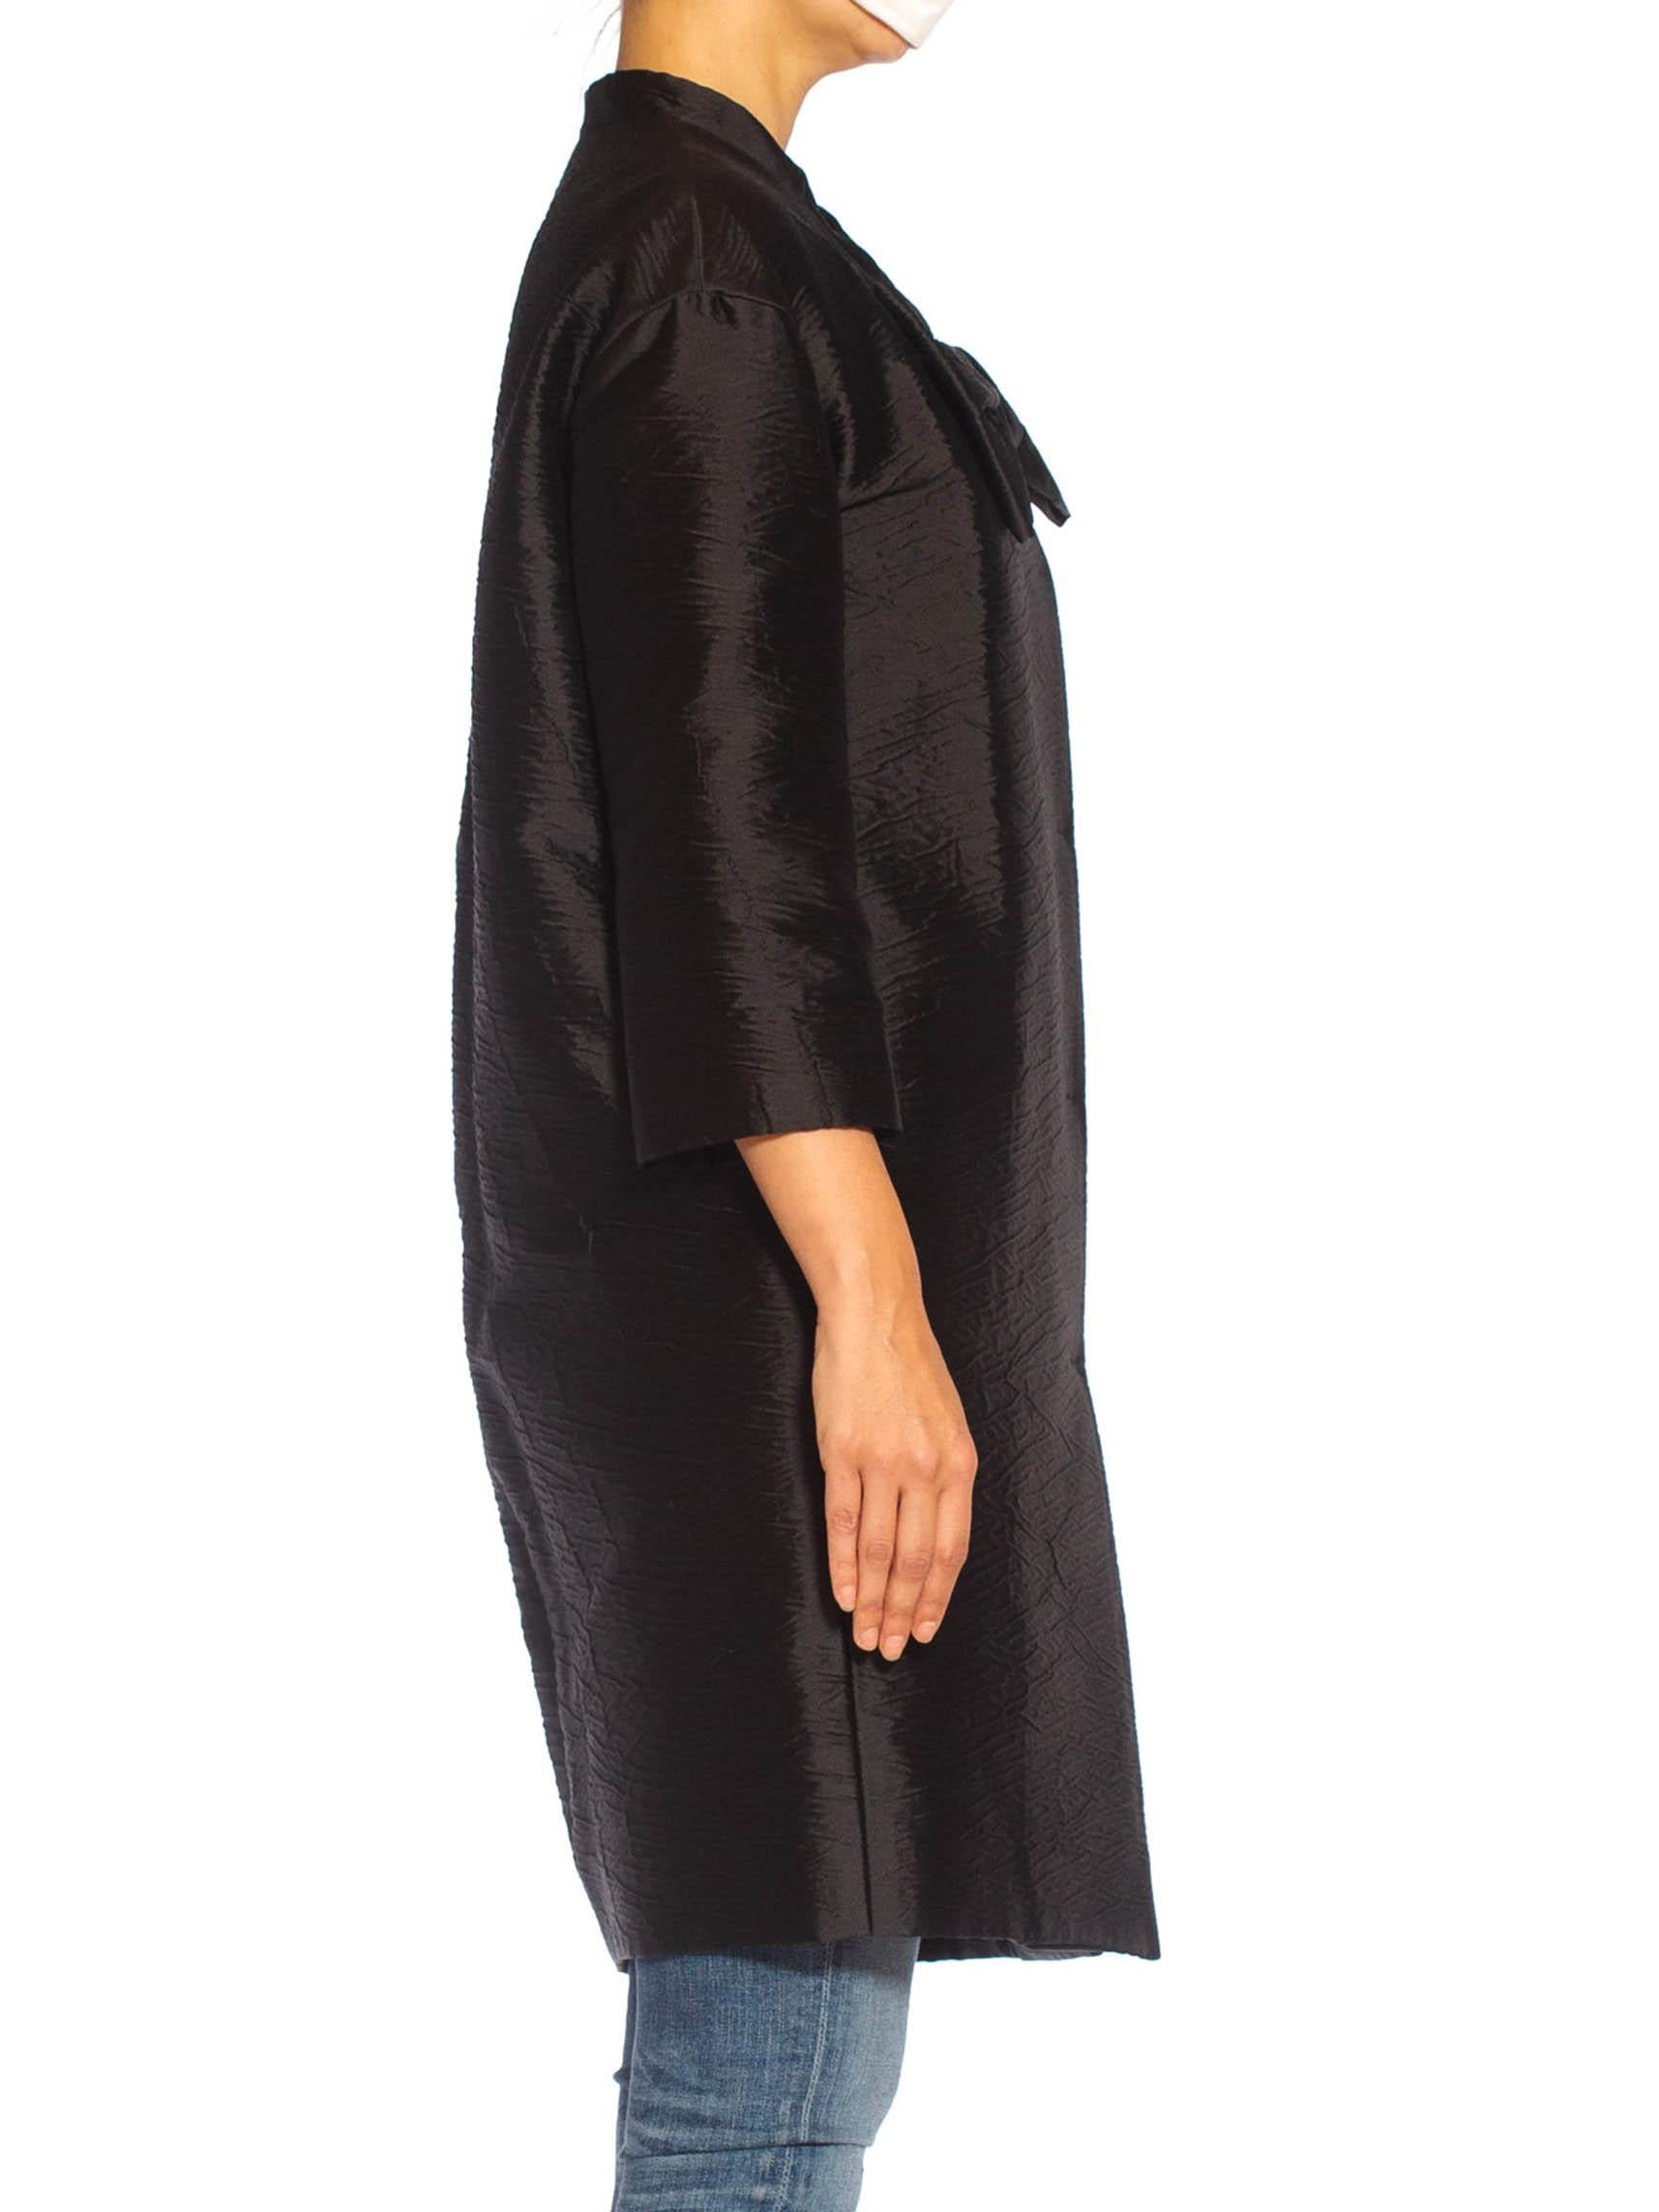 2000S PRADA Black Silk & Nylon Oversized Balenciaga Style Opera Coat With Giant Bow